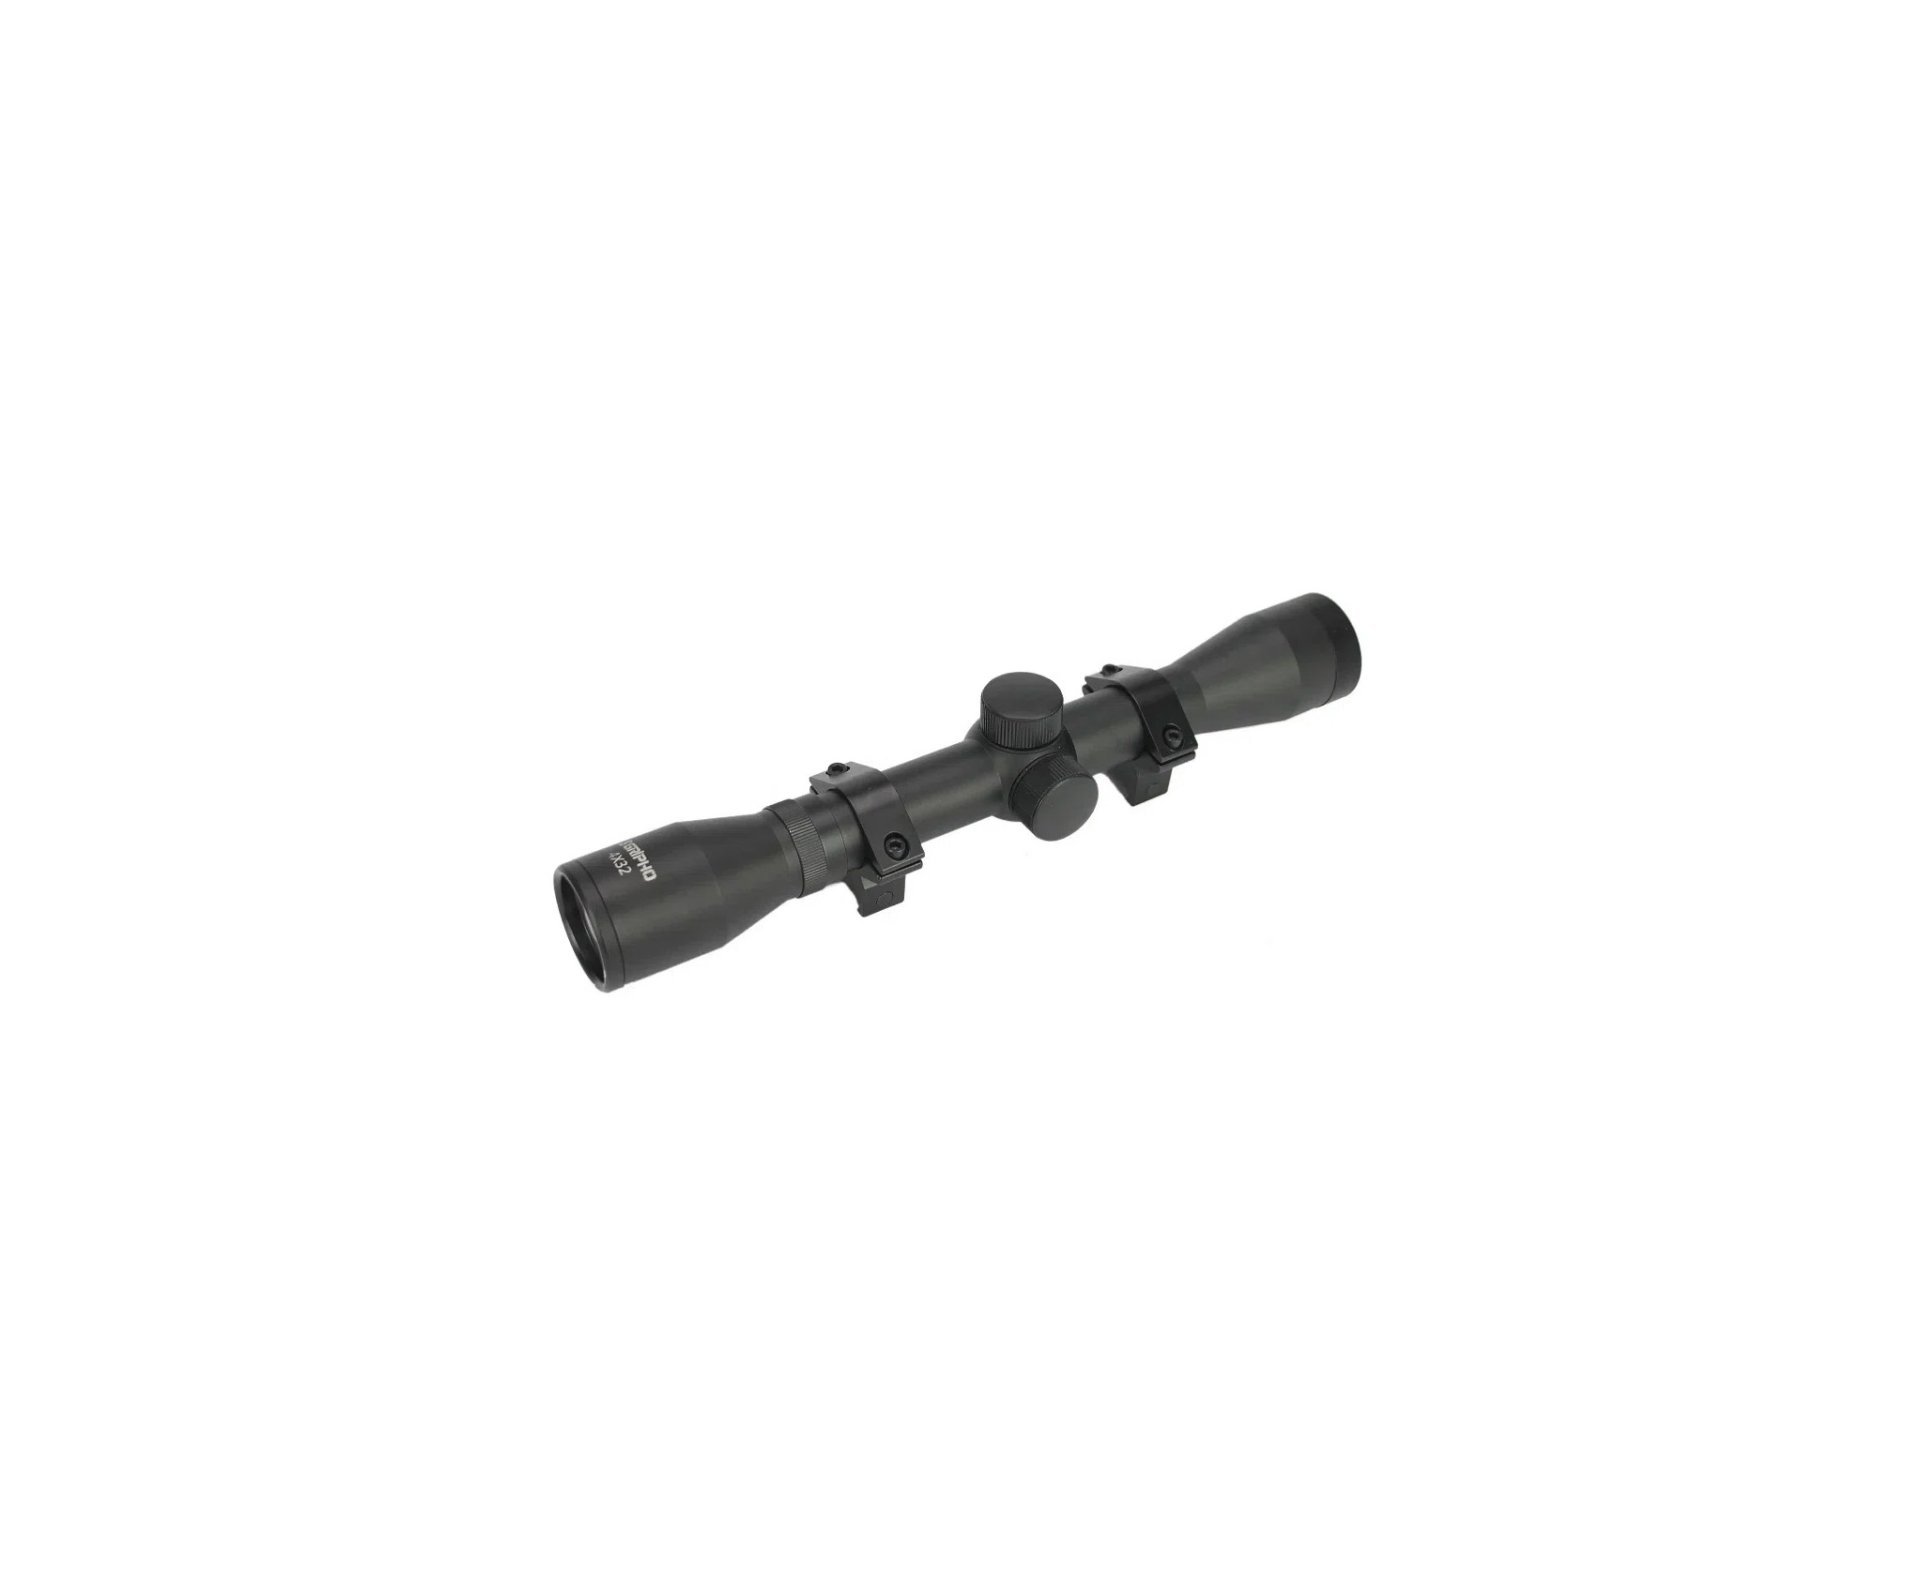 Rifle de Airsoft Sniper M40 SA-S02 Core S-Series TAN Spring 6mm - Specna Arms + Luneta 4x32 + BBs + Óleo de Silicone + Alvos